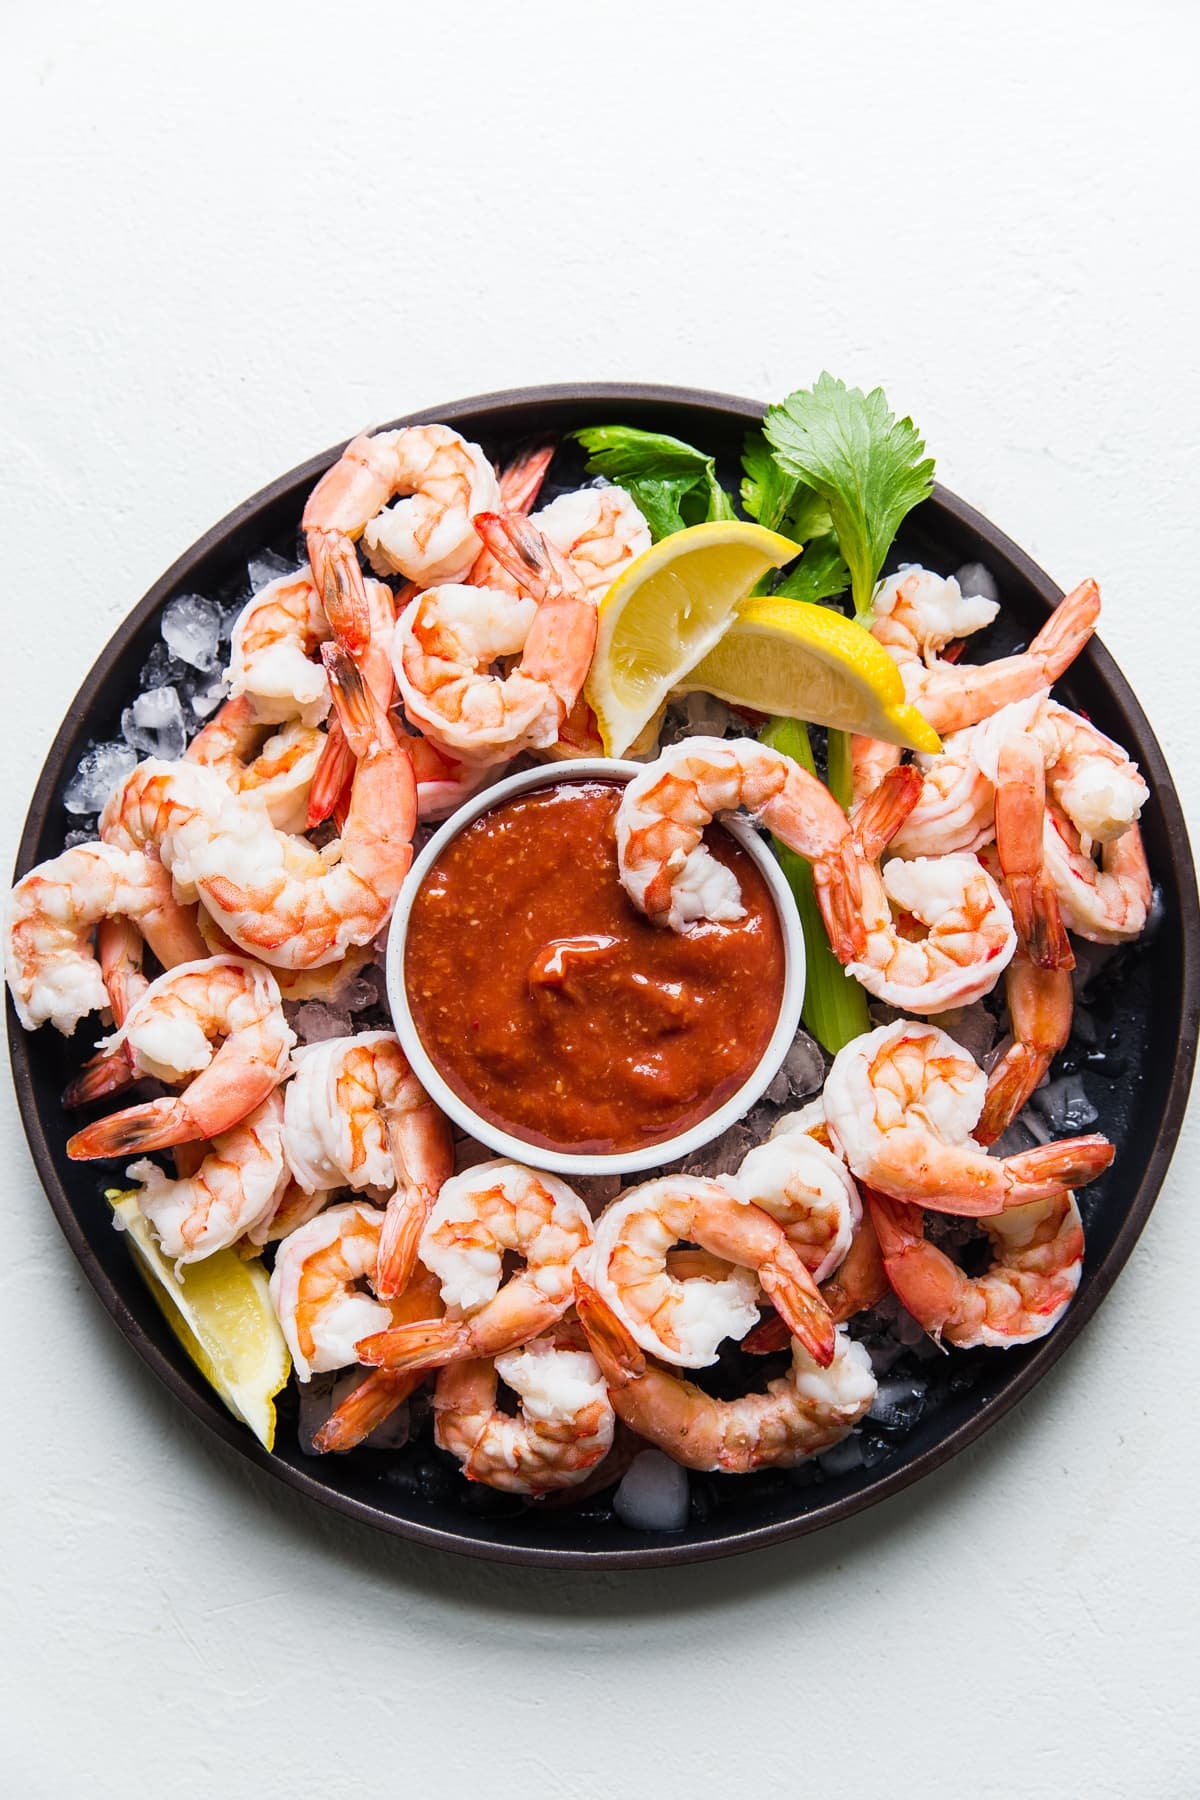 shrimp cocktail sauce with shrimp over ice on a black plate